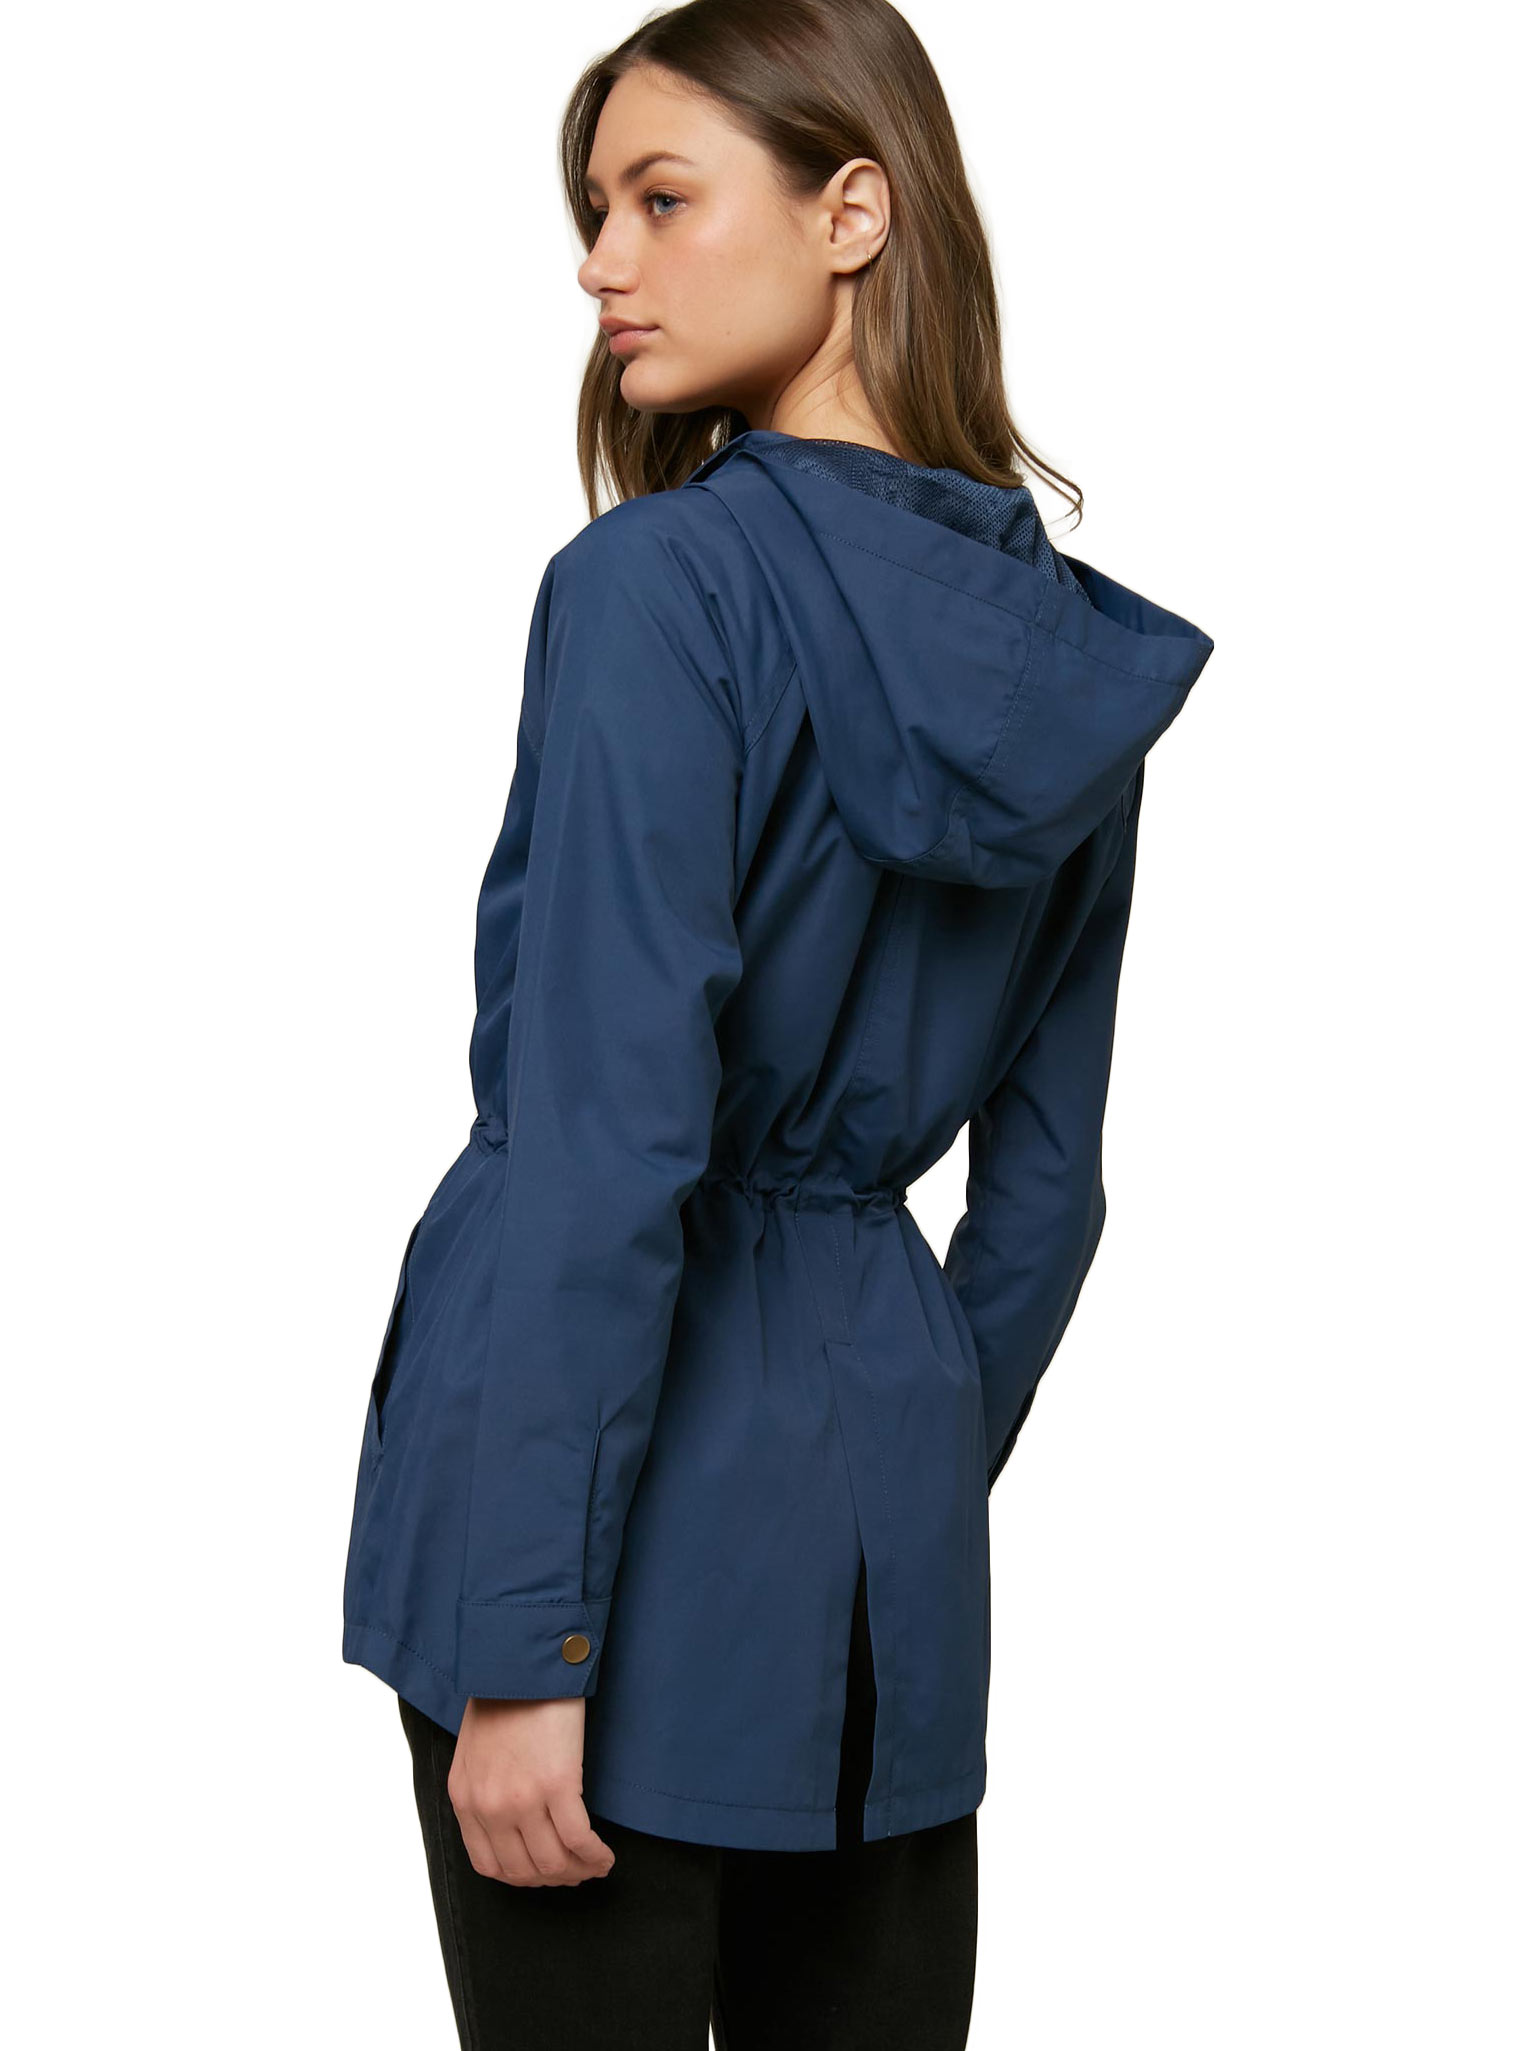 O'Neill Womens Gayle Rain Jacket Insignia blue M - image 3 of 4